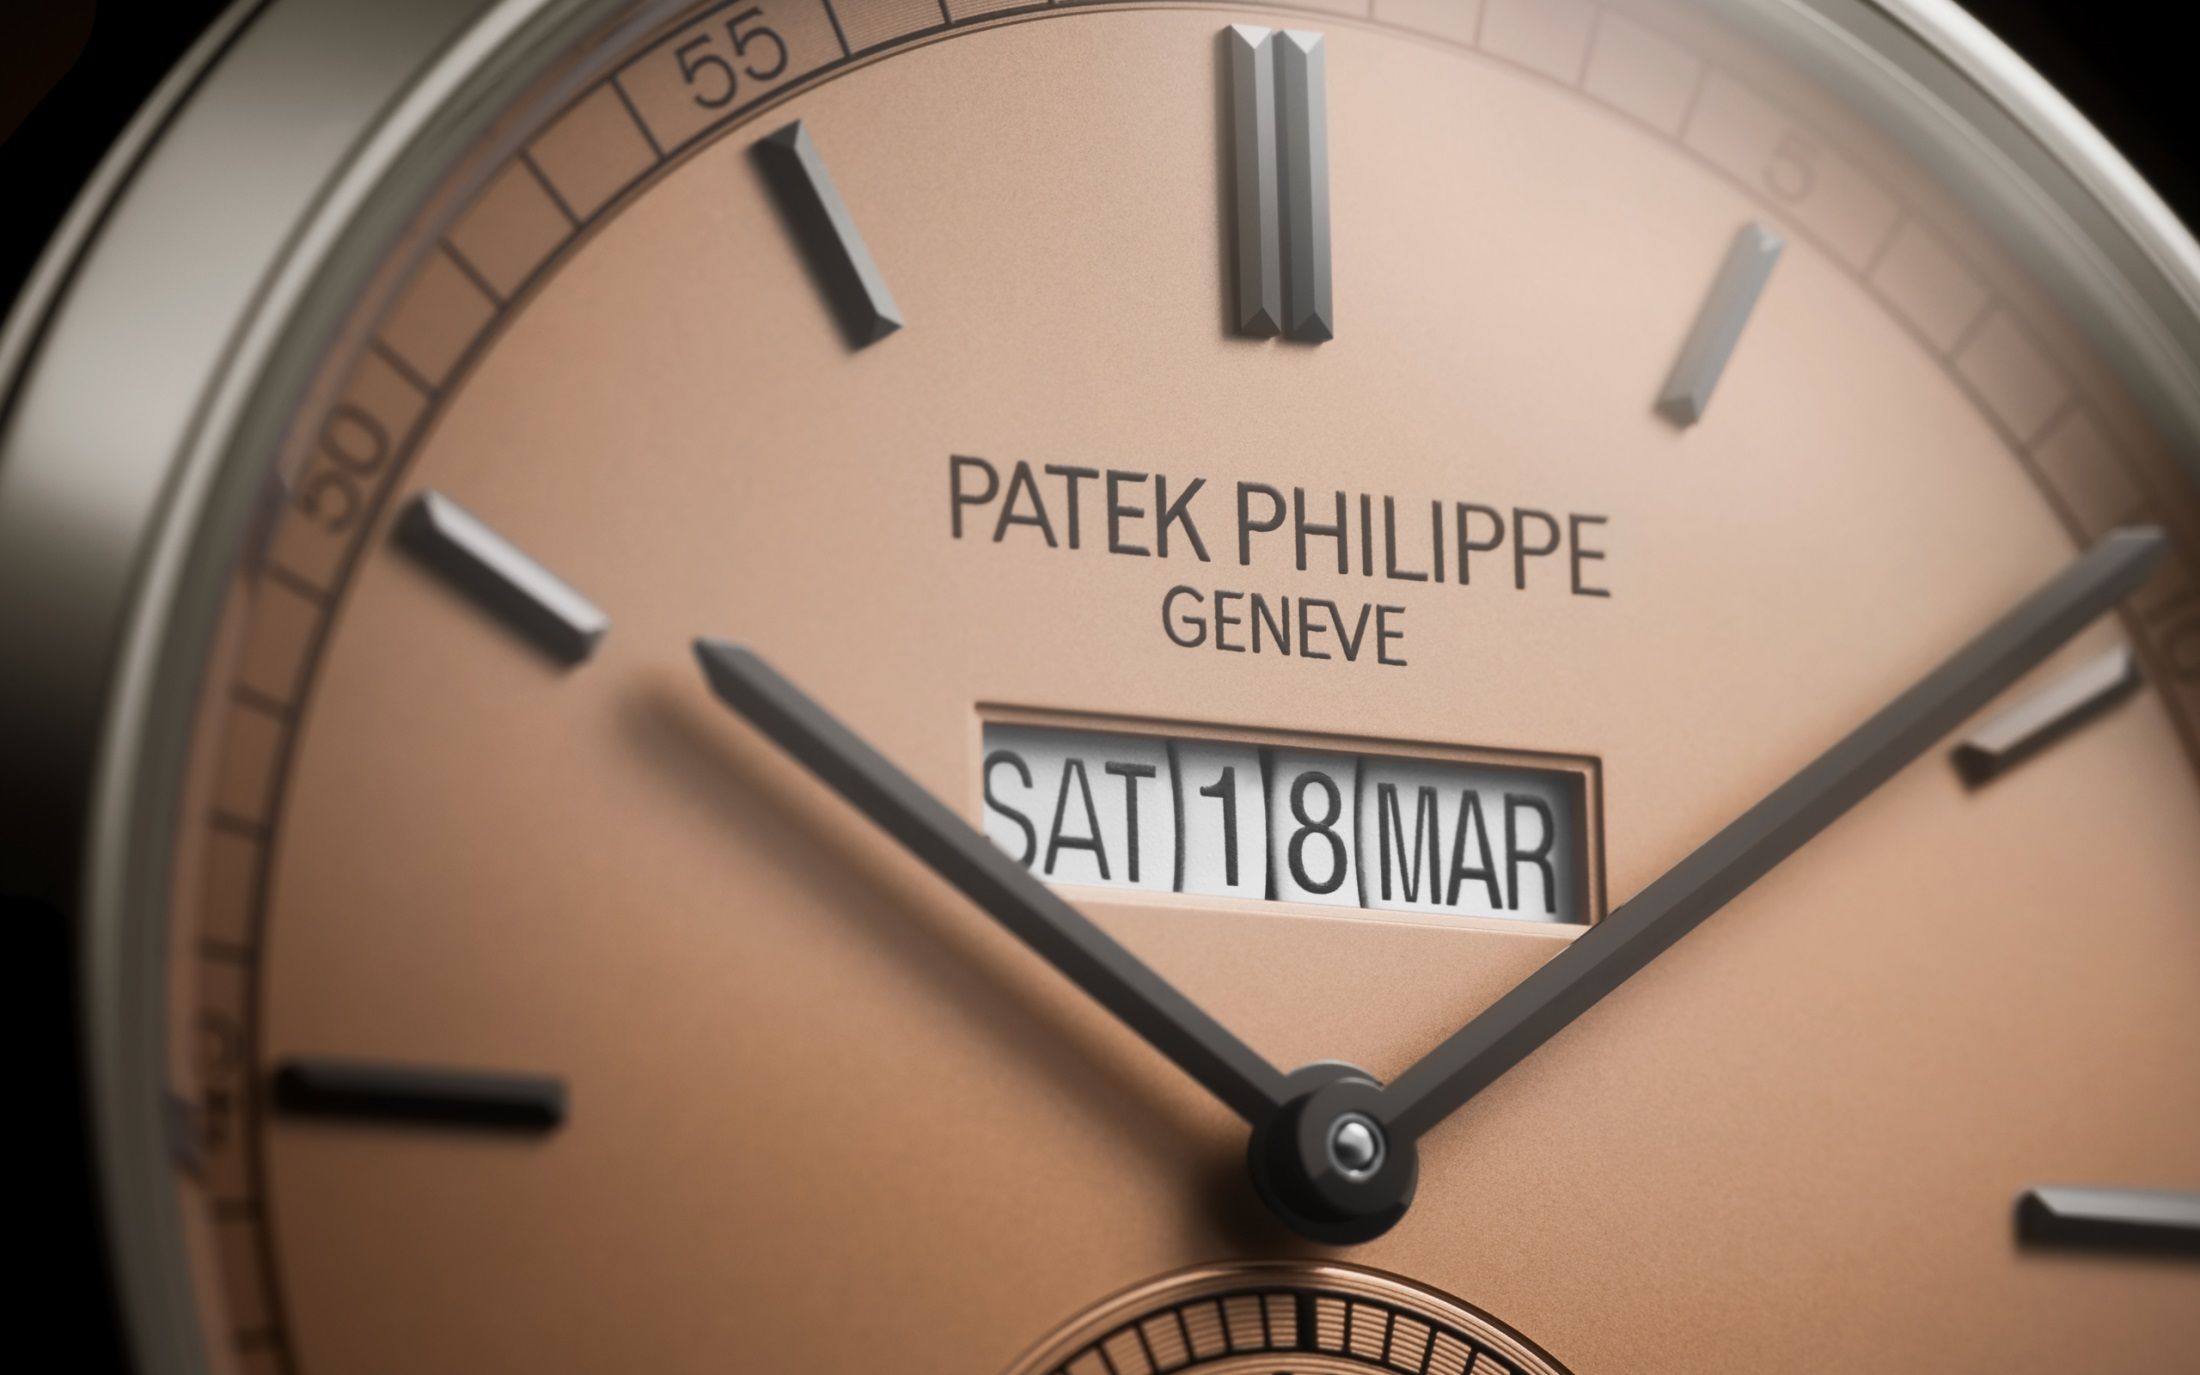 Patek Philippe 5236P In-Line Perpetual Calendar Day-Date